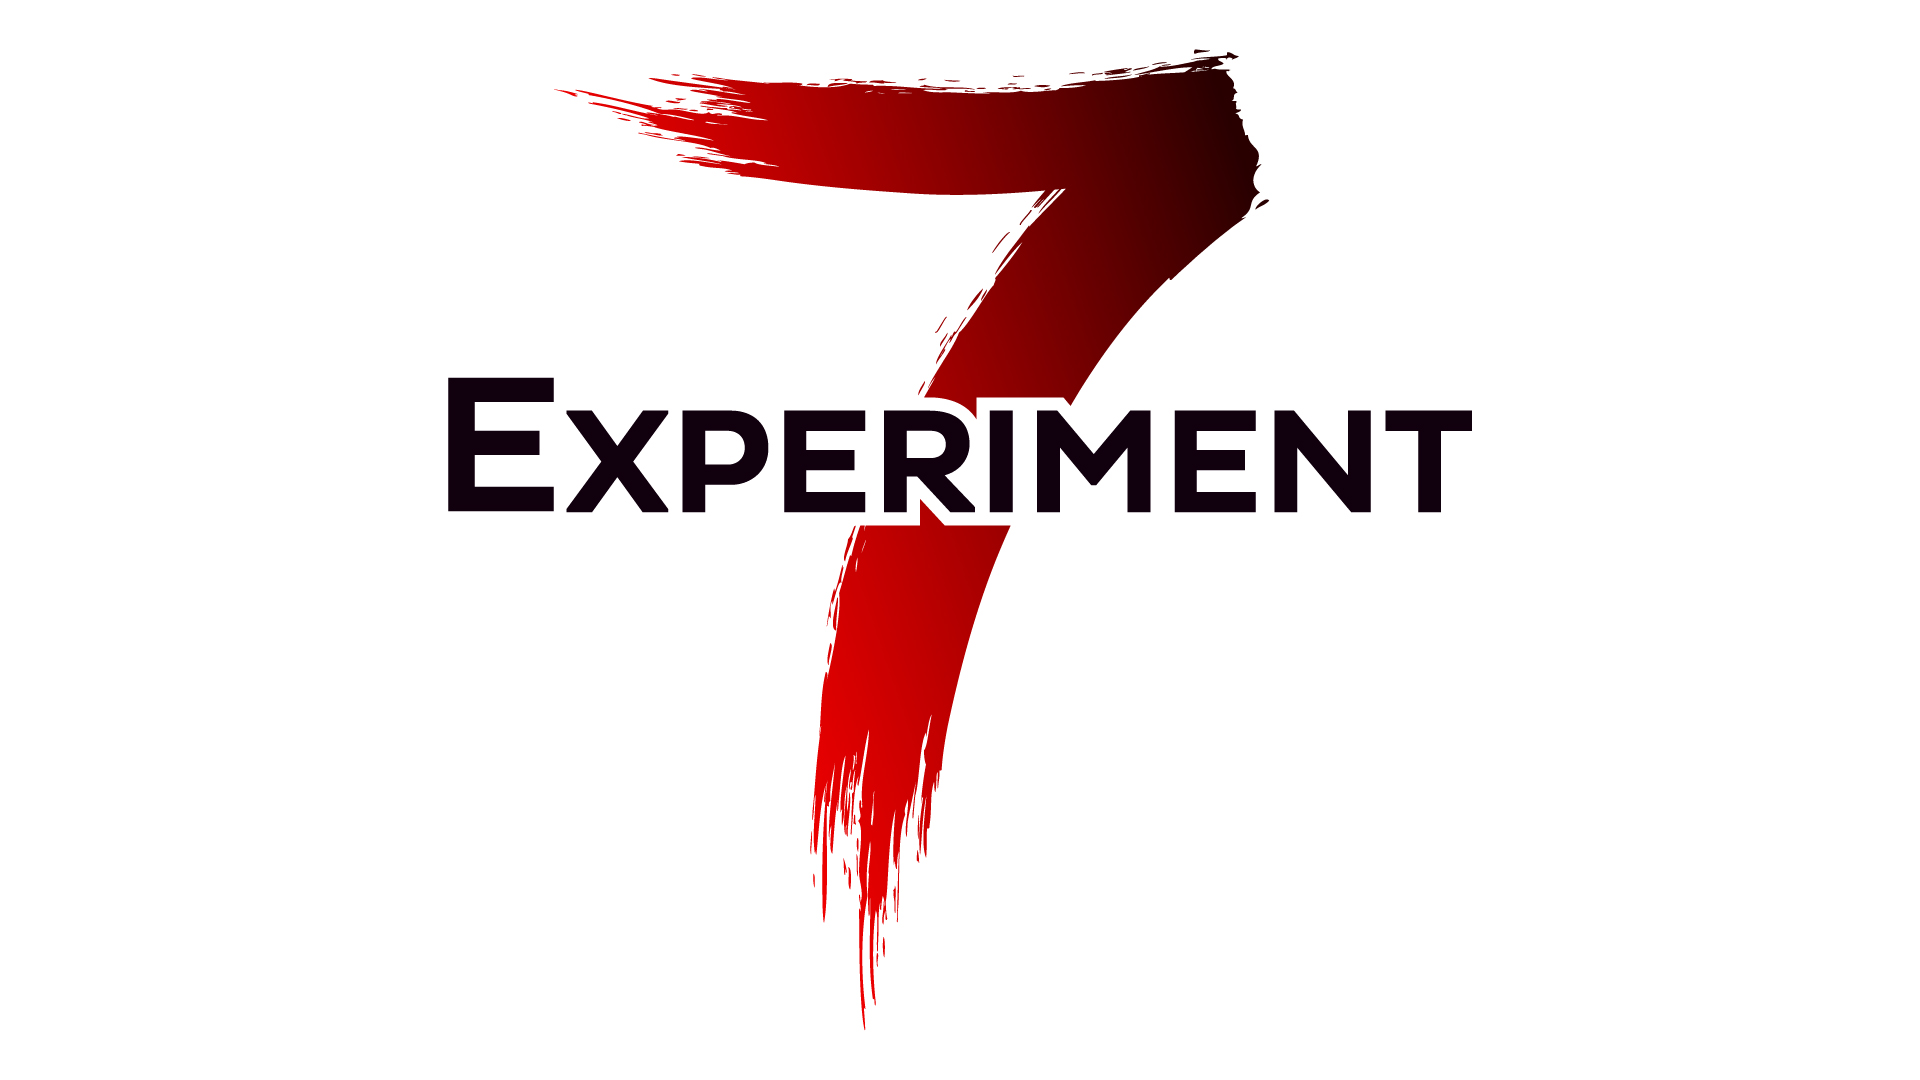 Experiment 7 company 